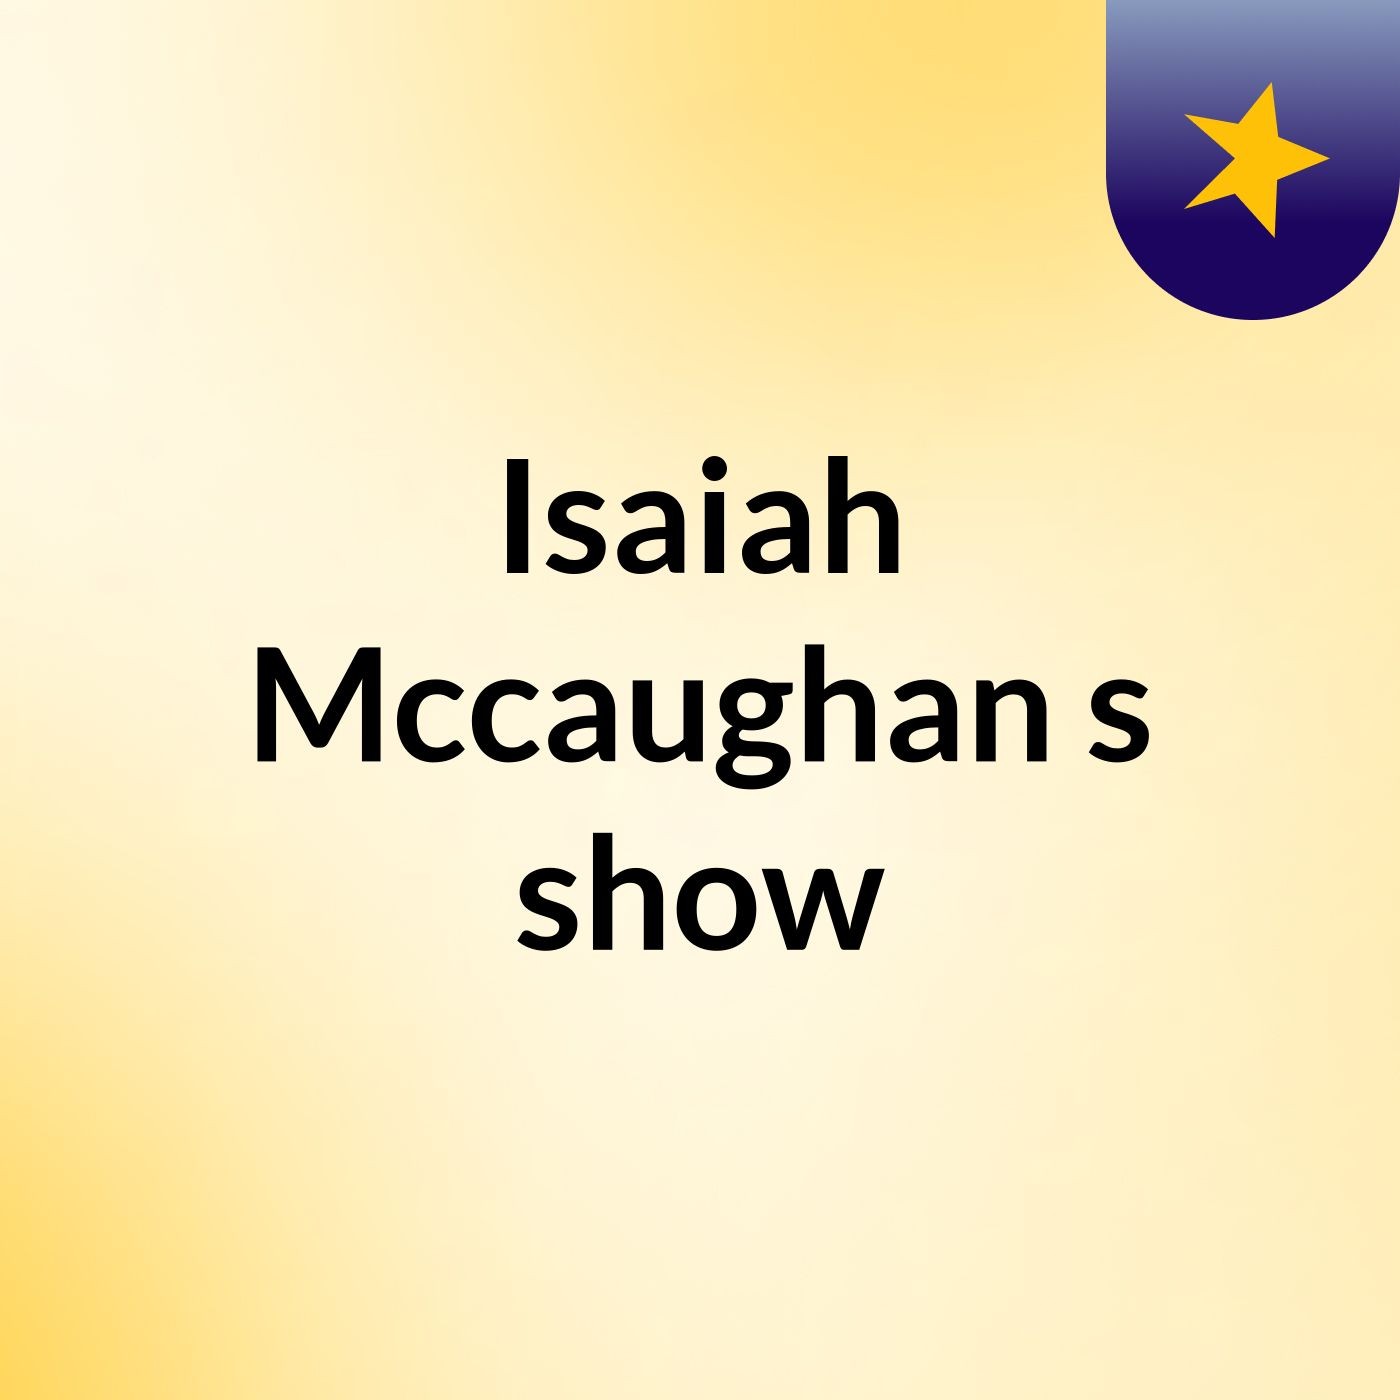 Episode 6 - Isaiah Mccaughan's show